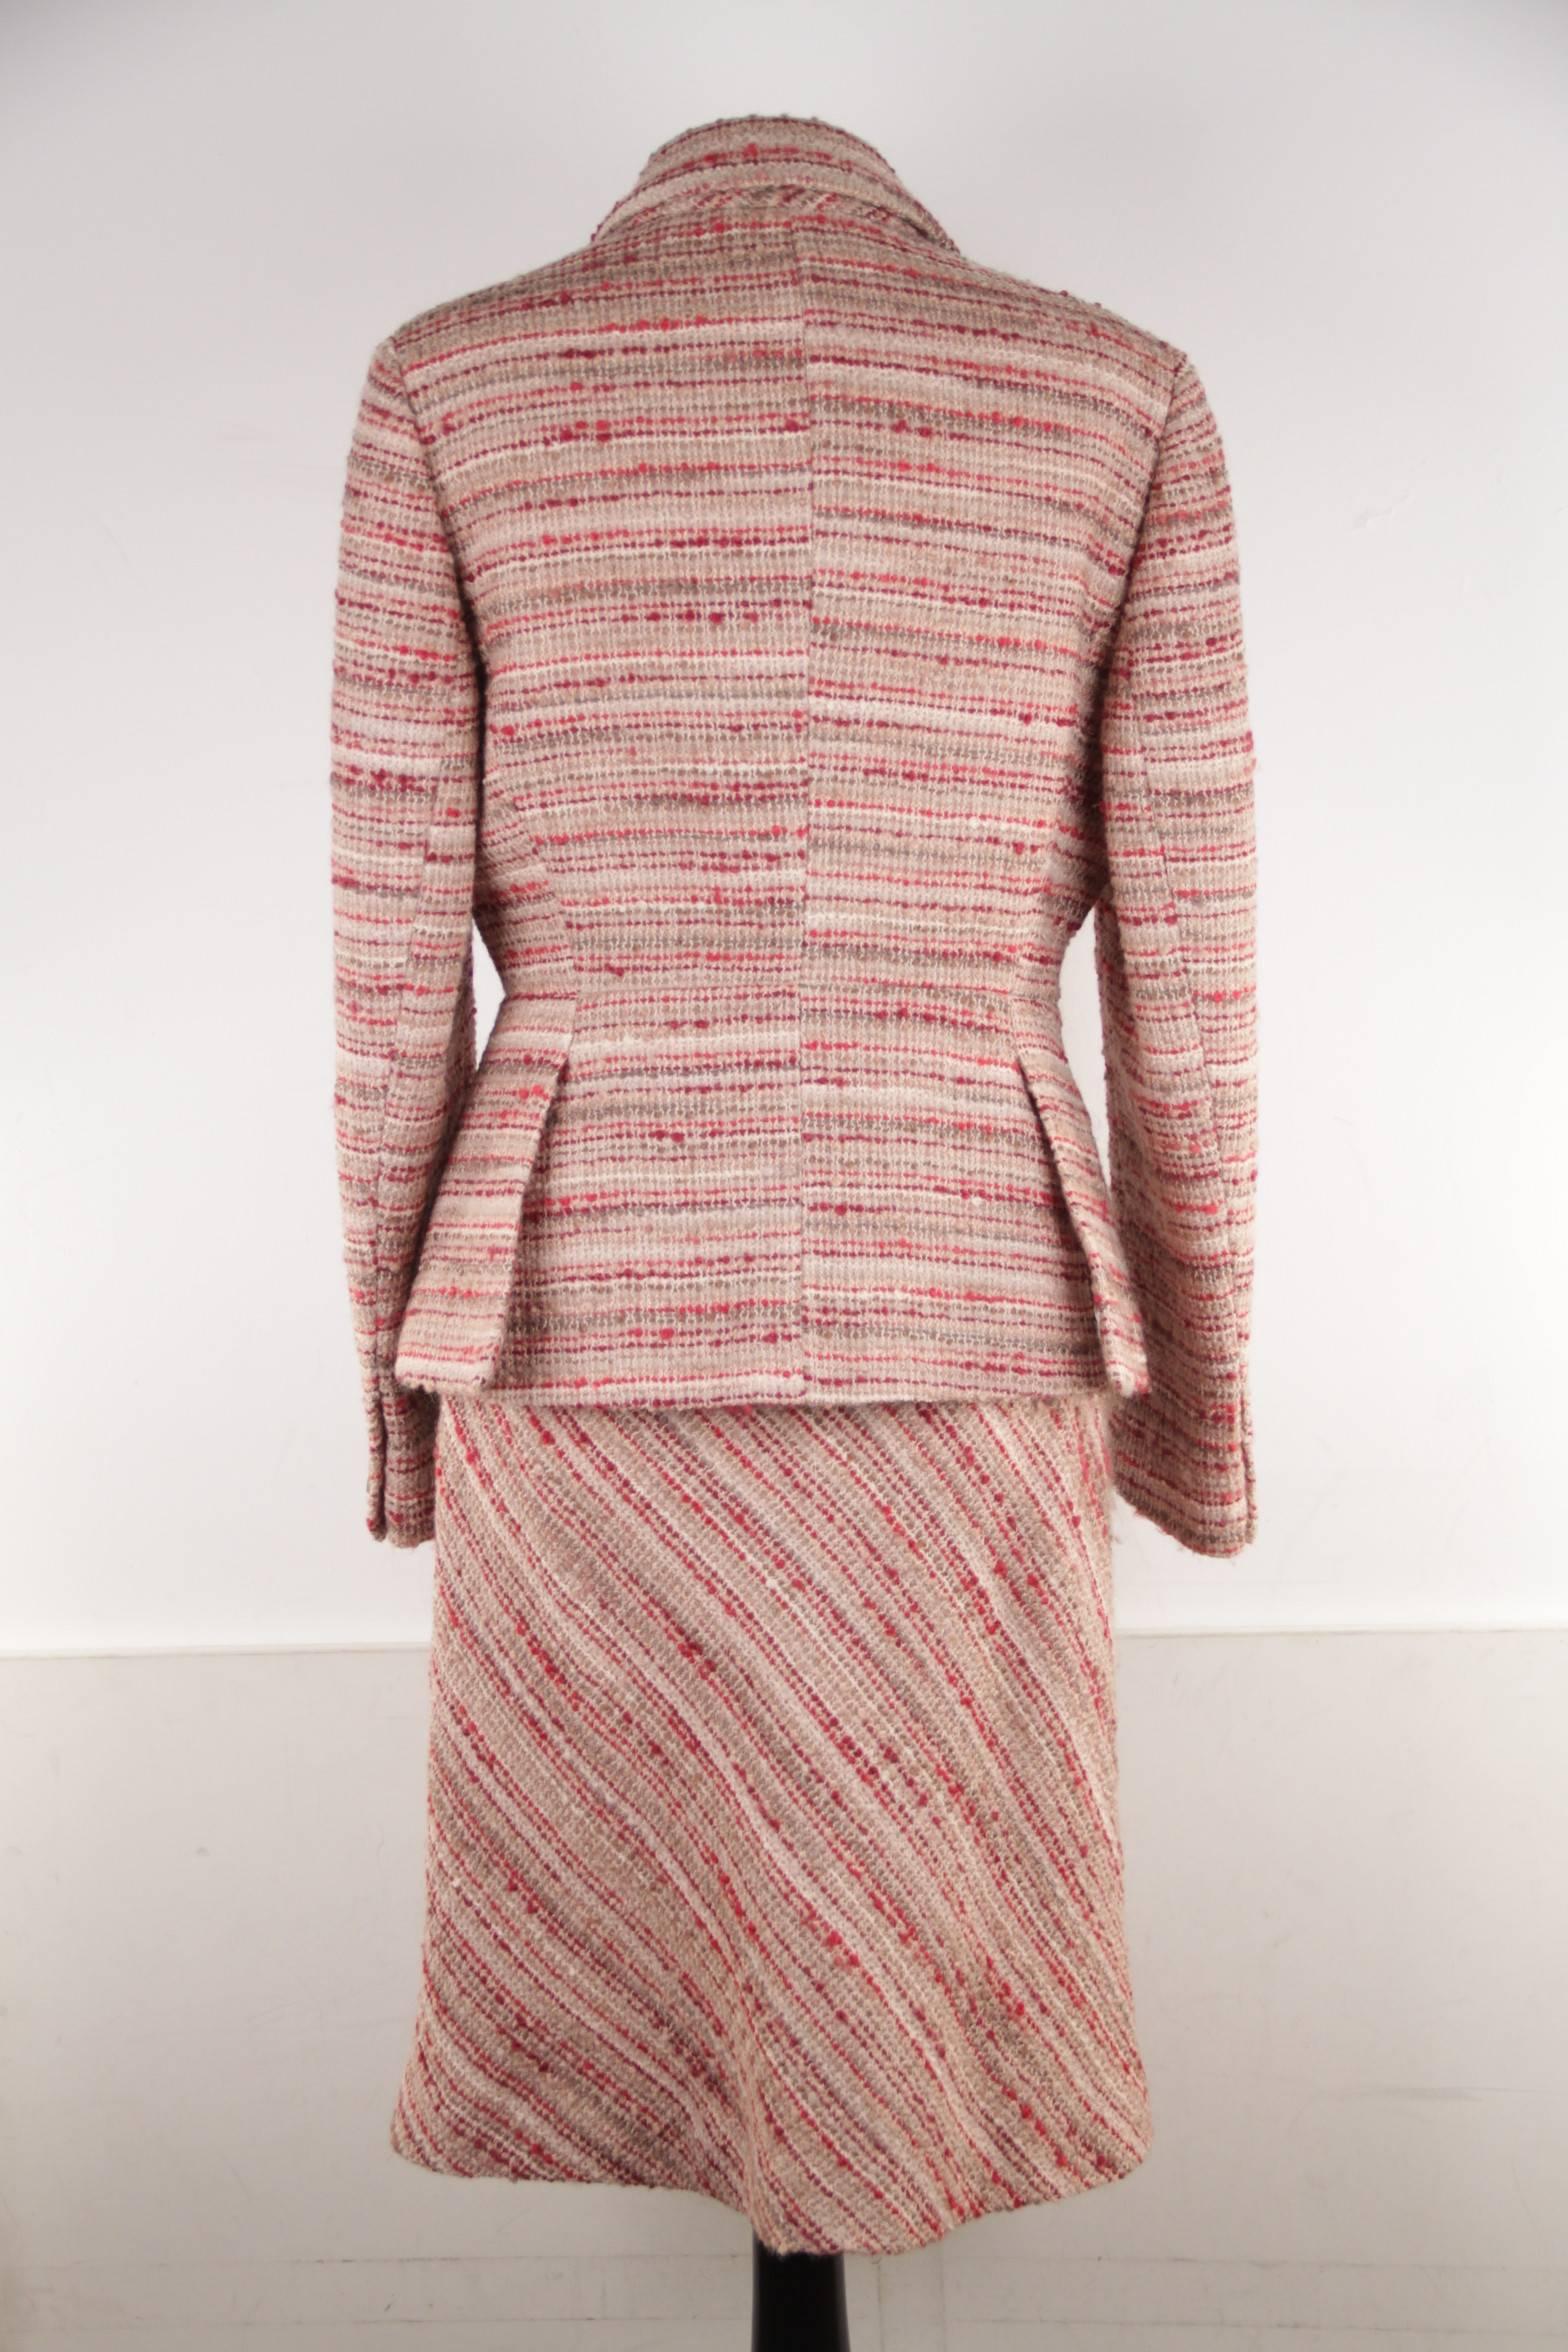 PRADA Italian Red  BOUCLE Tweed Wool SUIT Blazer & Skirt SIZE 42-44 IT  1